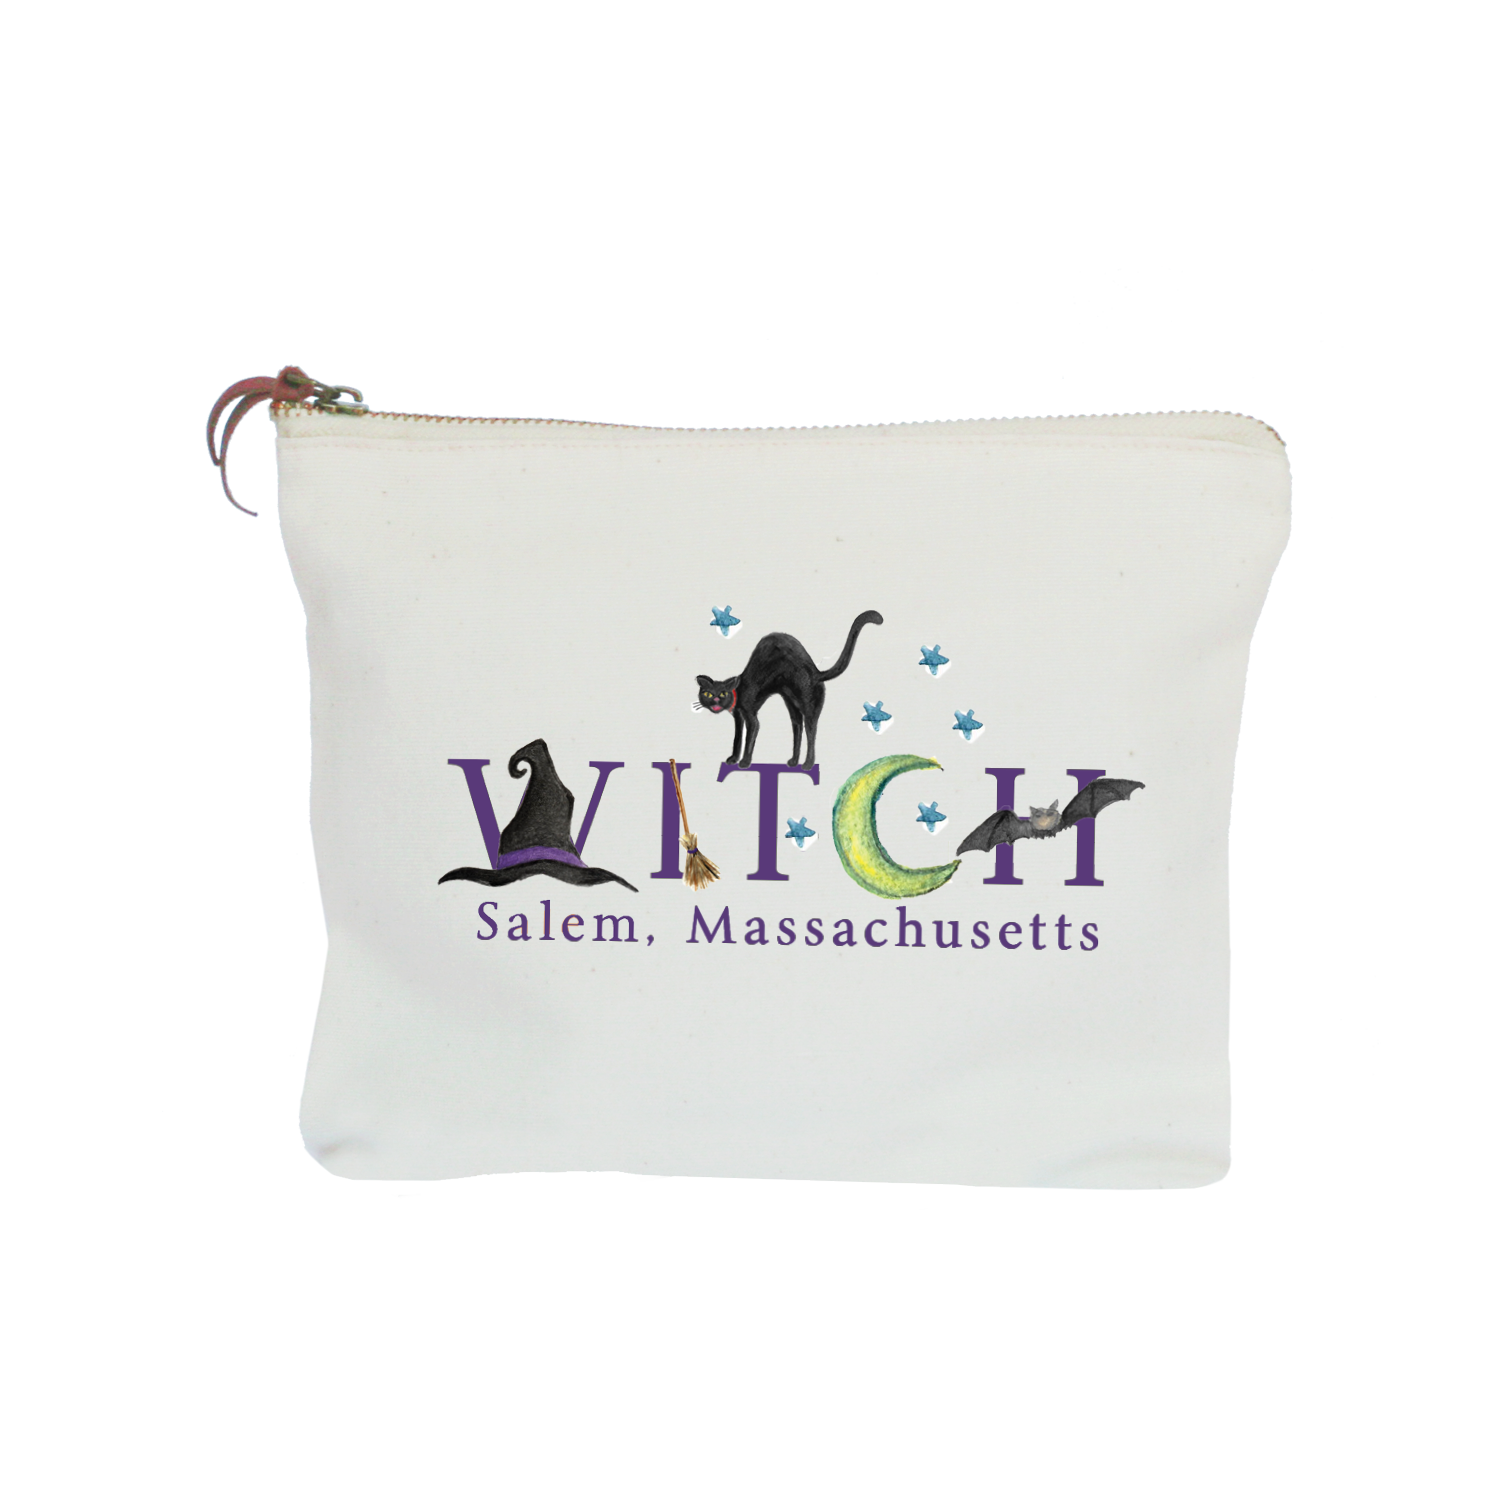 witch salem with black cat zipper pouch